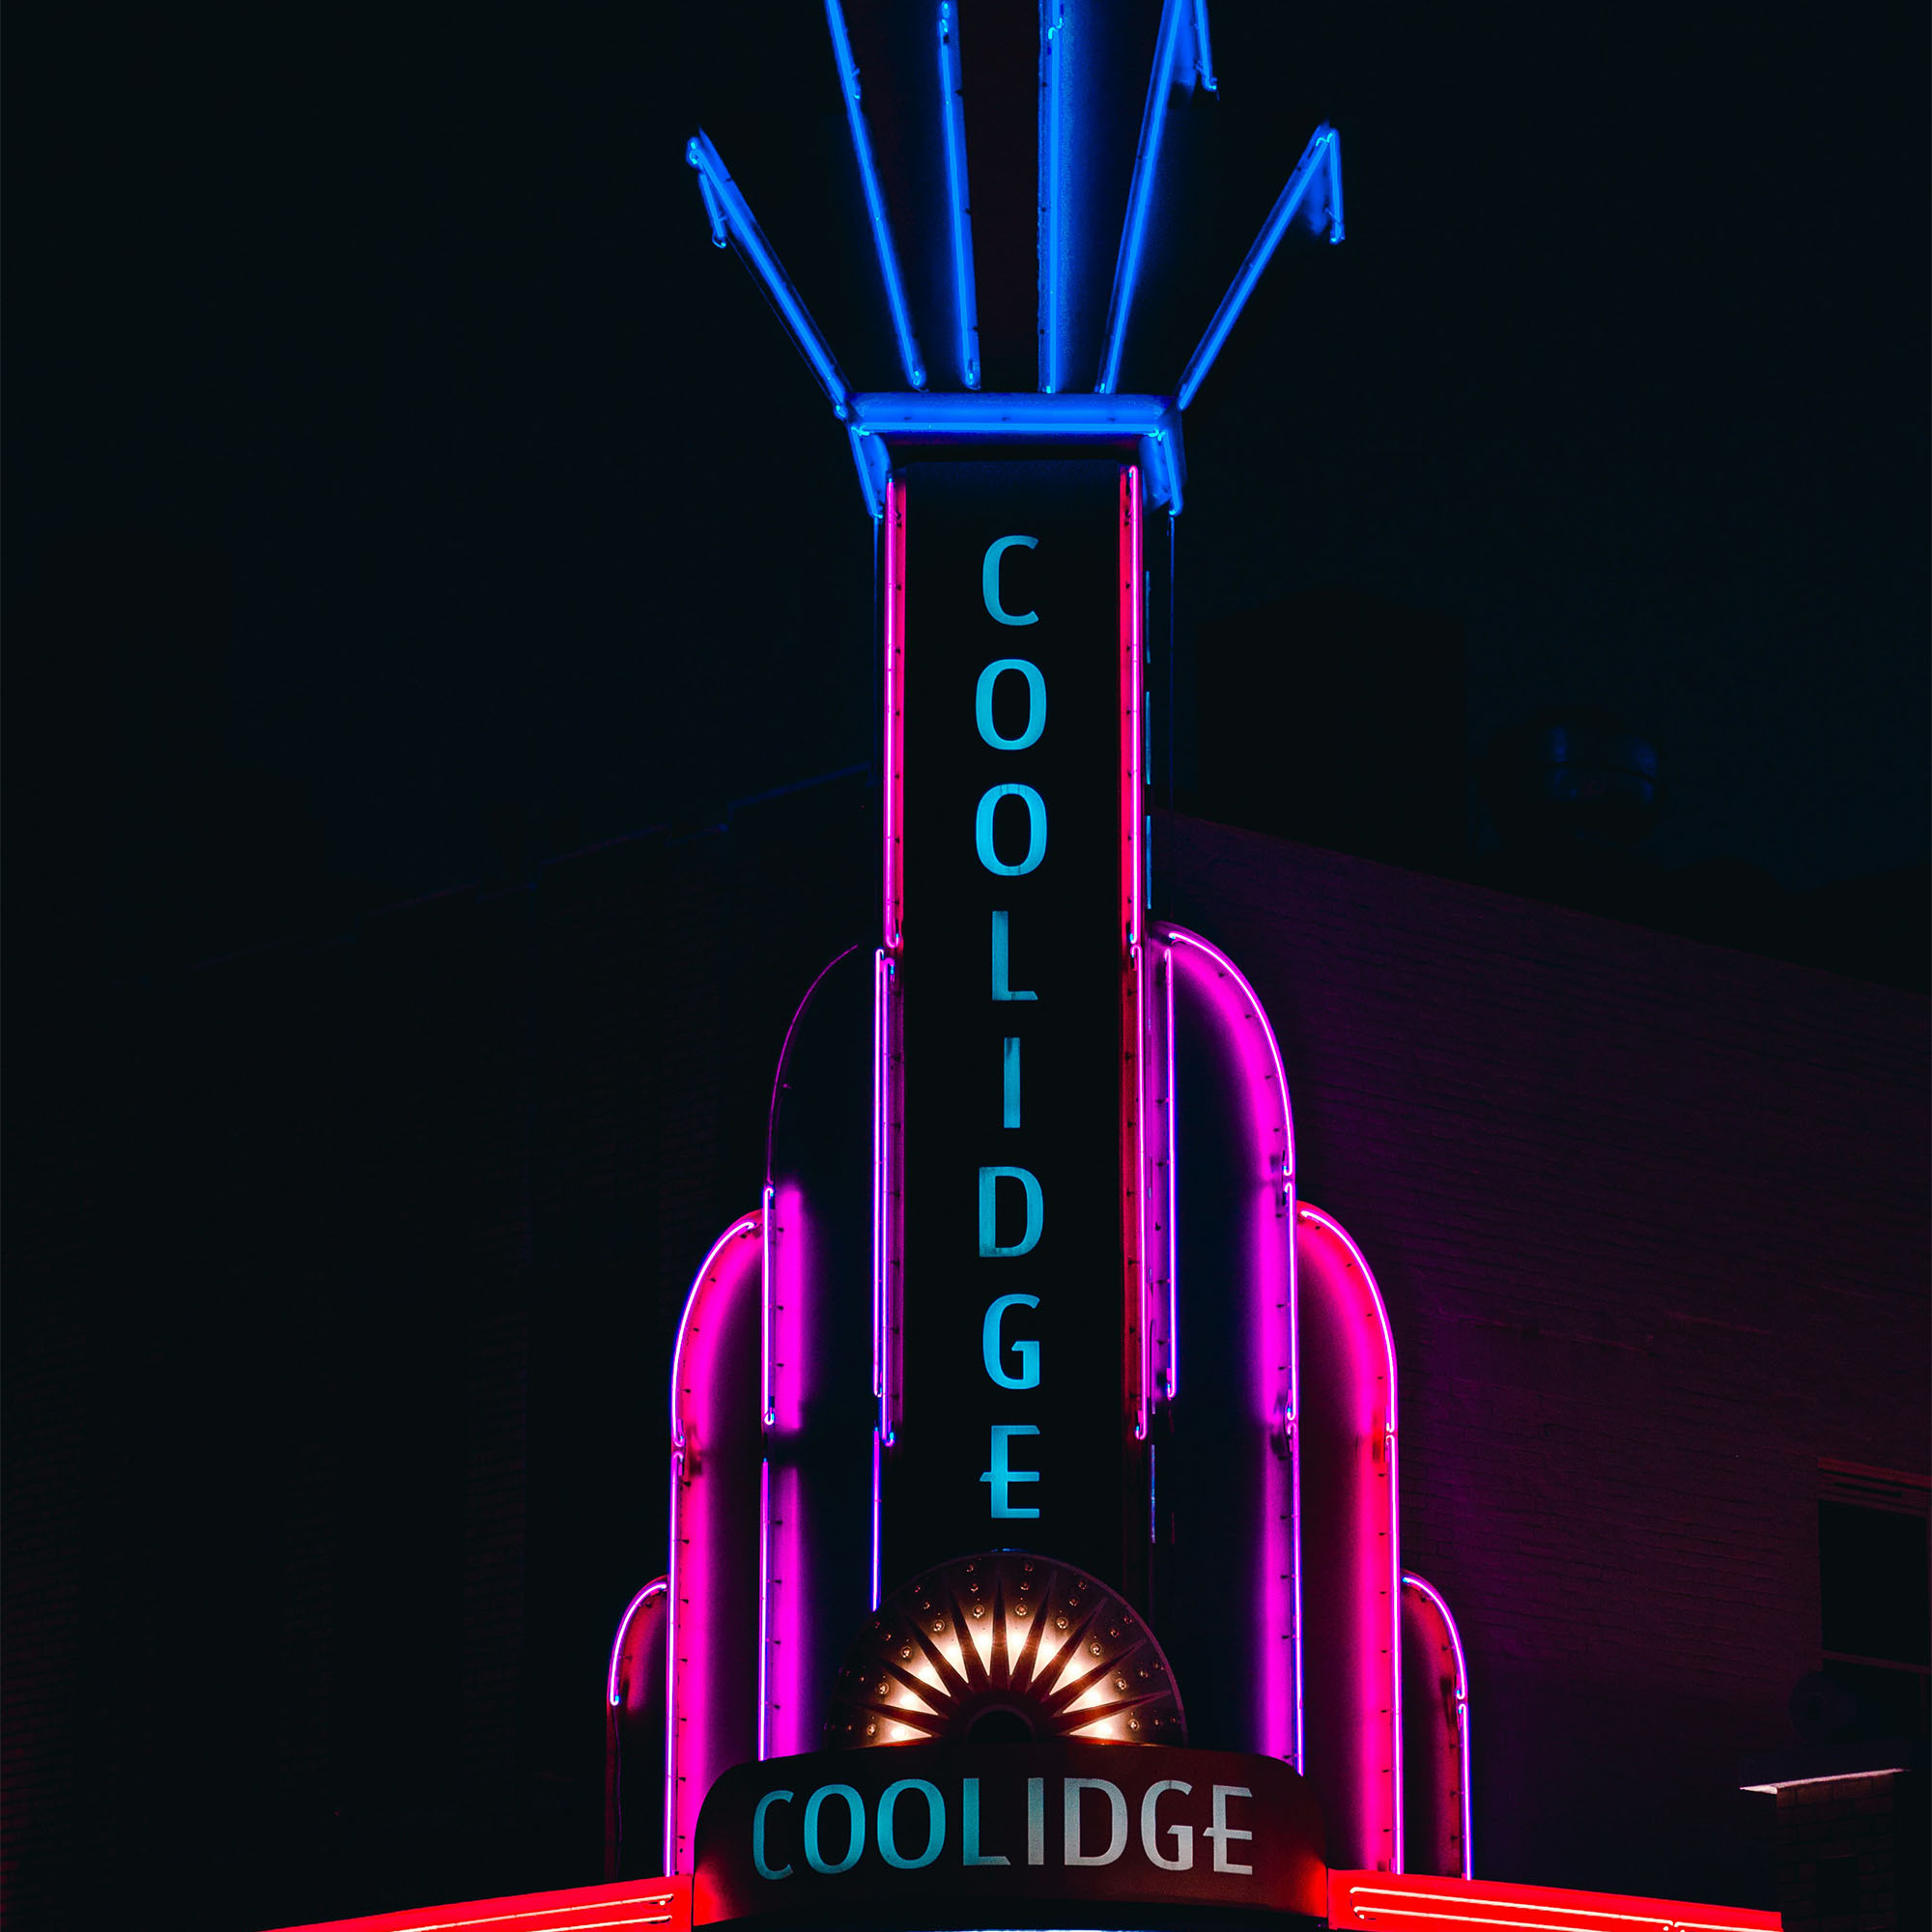 Photo: A neon illuminated sign reading "Coolidge" outside Coolidge Corner theatre in Brookline, MA